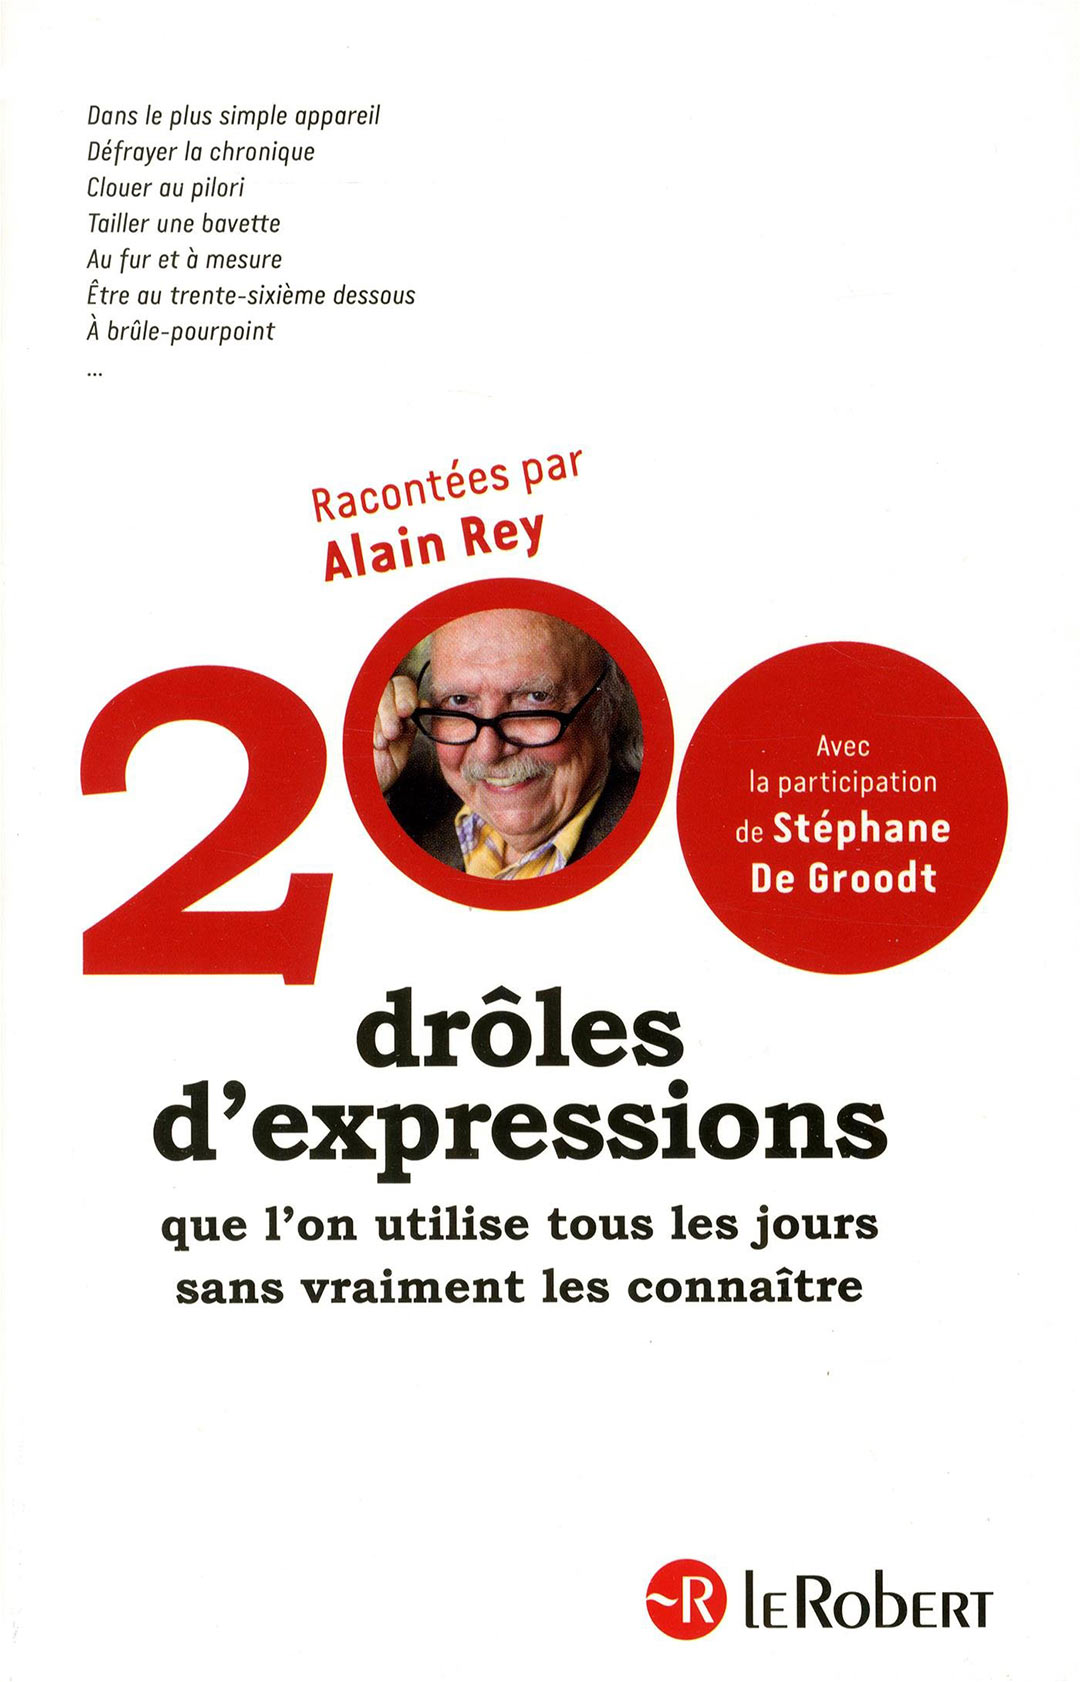 Rey Alain - 200 drôles dexpressions скачать бесплатно